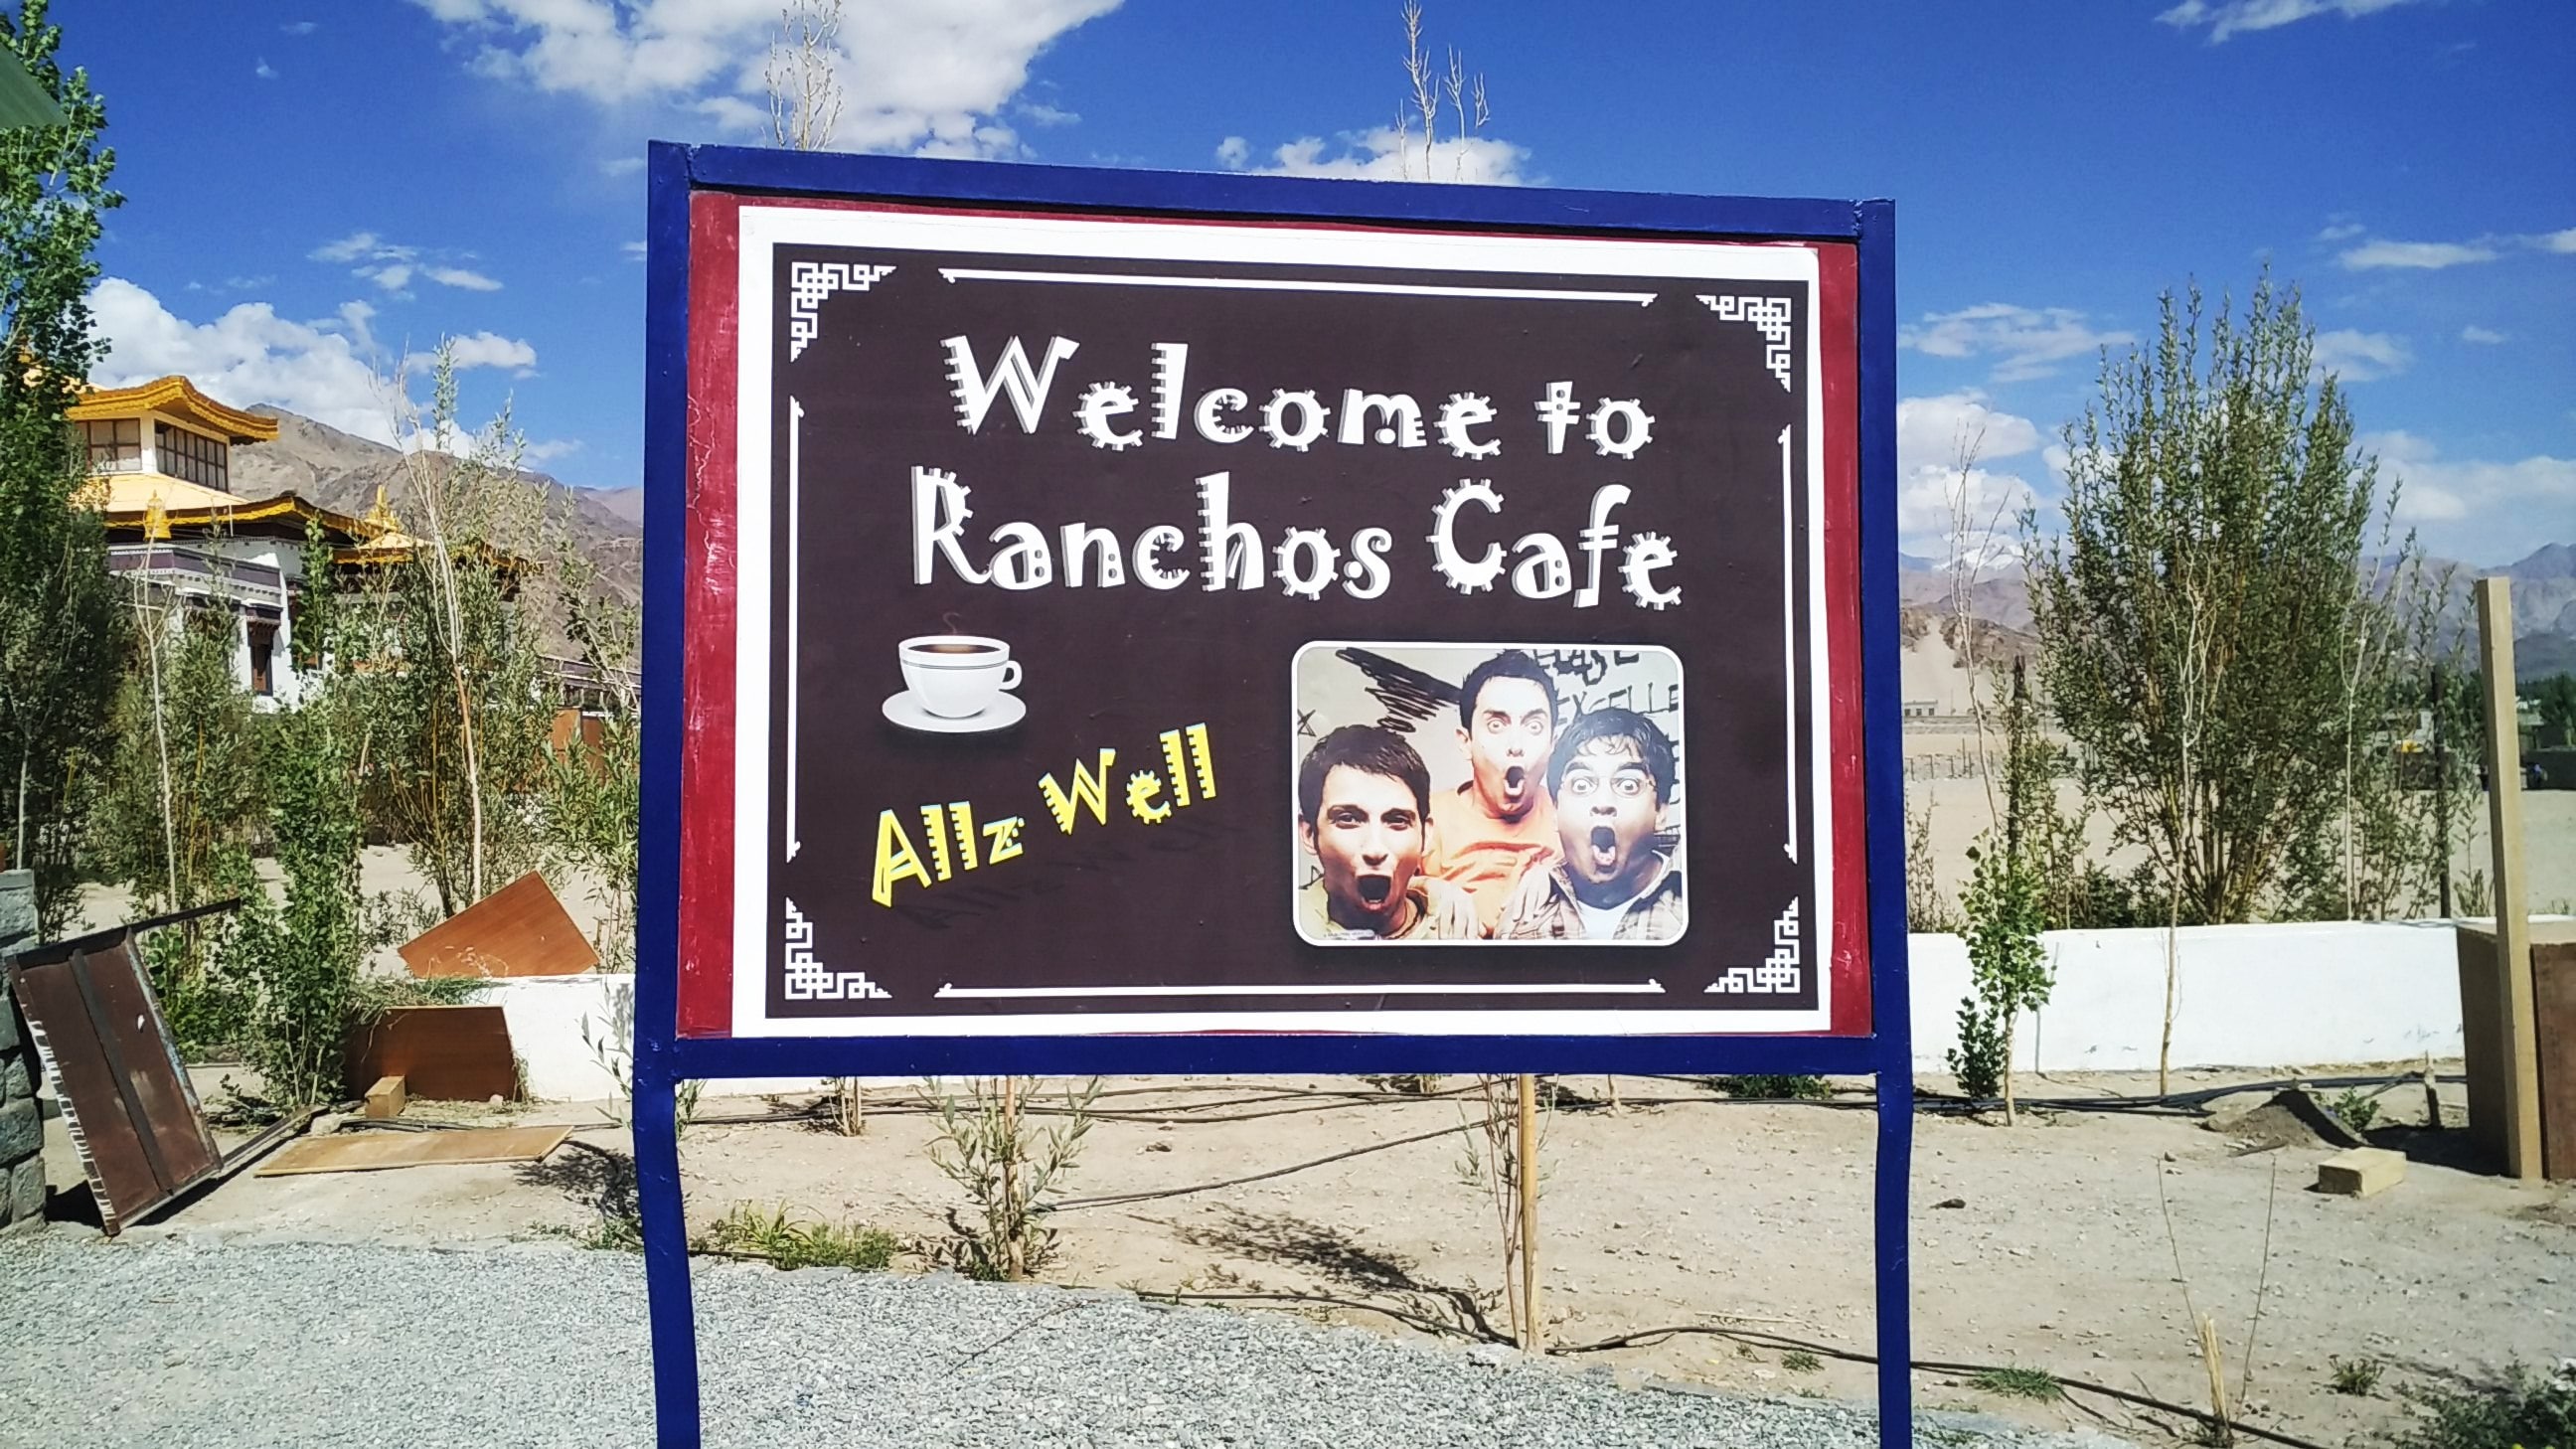 Rancho's Cafe